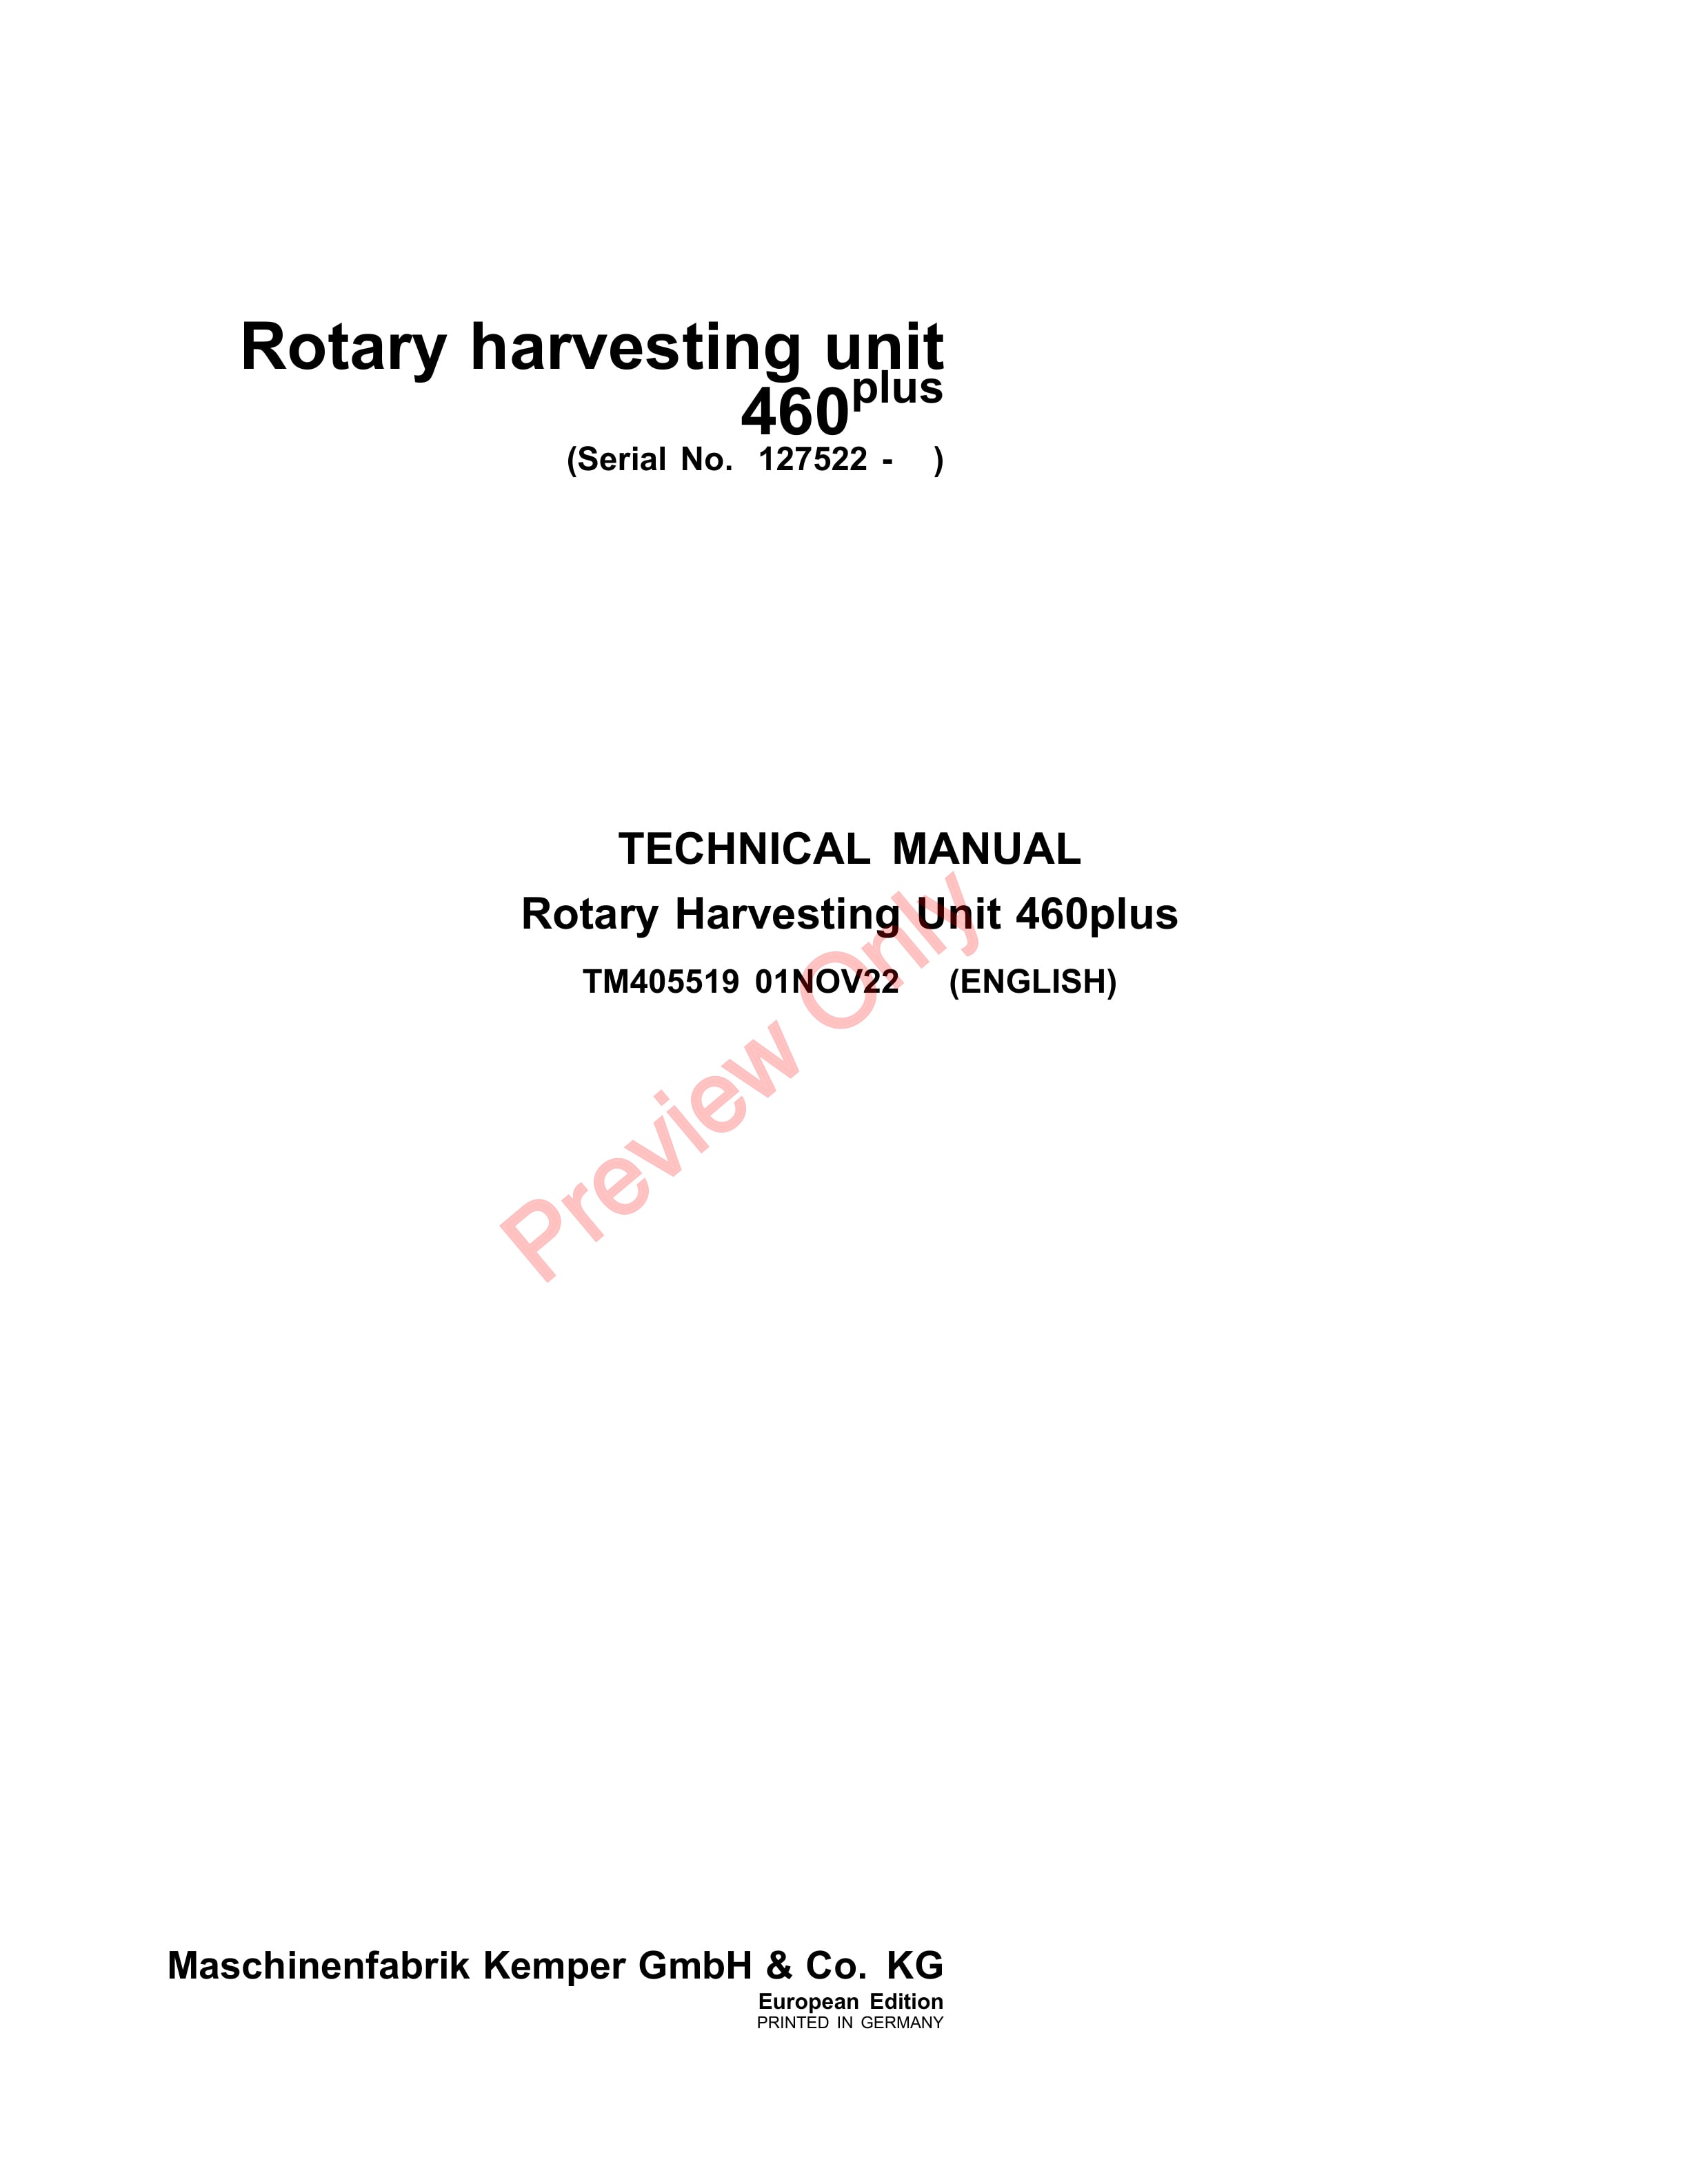 John Deere 460 Rotary Harvesting Units Technical Manual TM405519 01NOV22-1